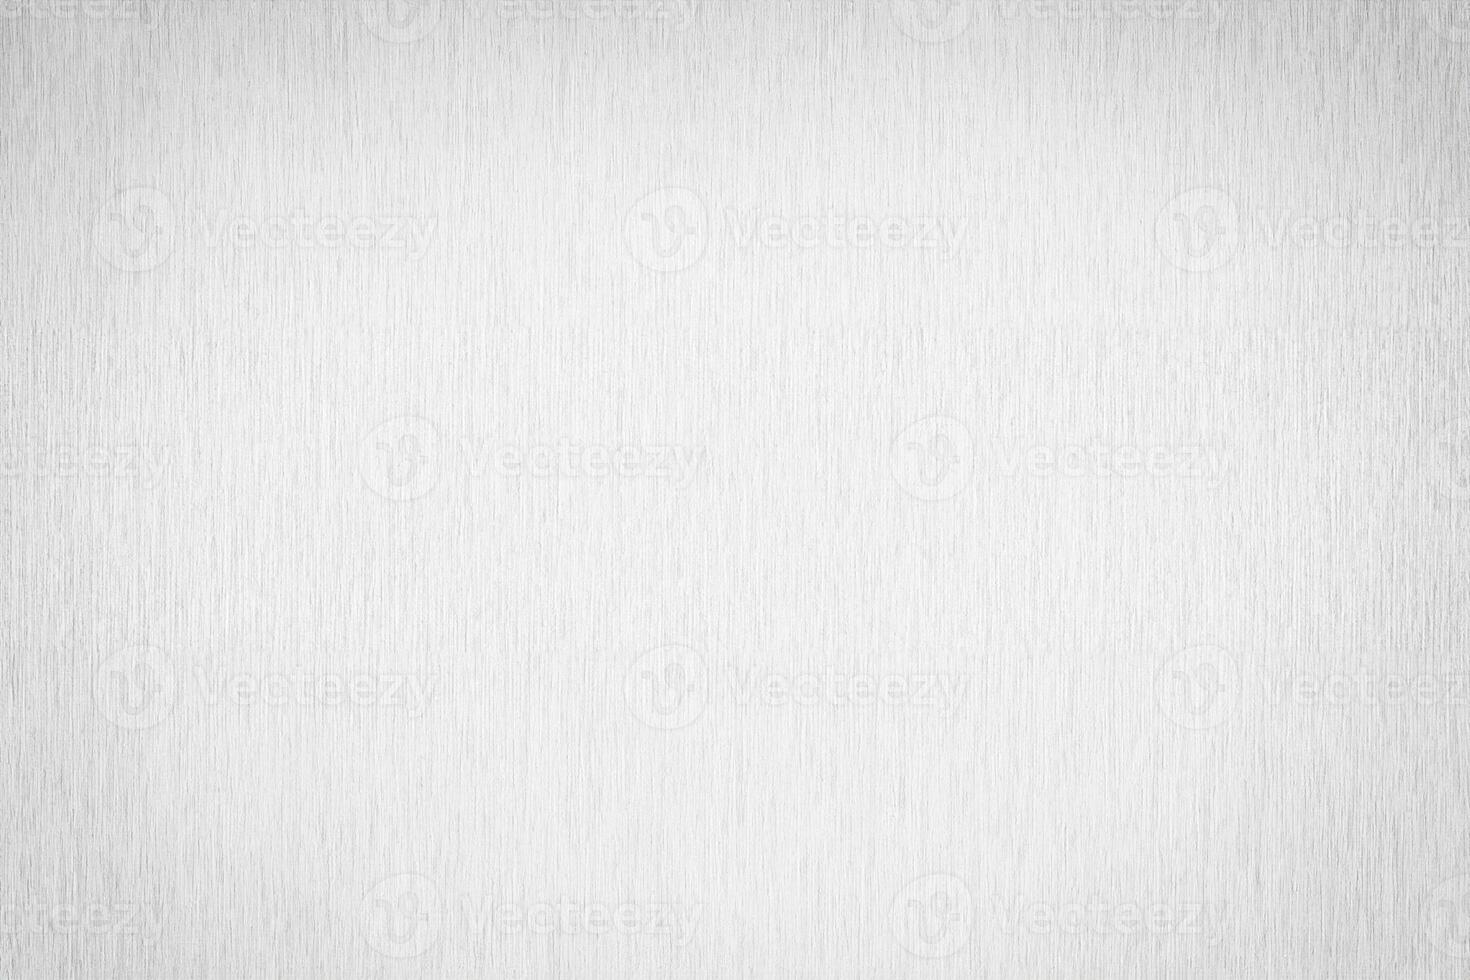 Minimalist White and Gray Wood Texture Background. photo